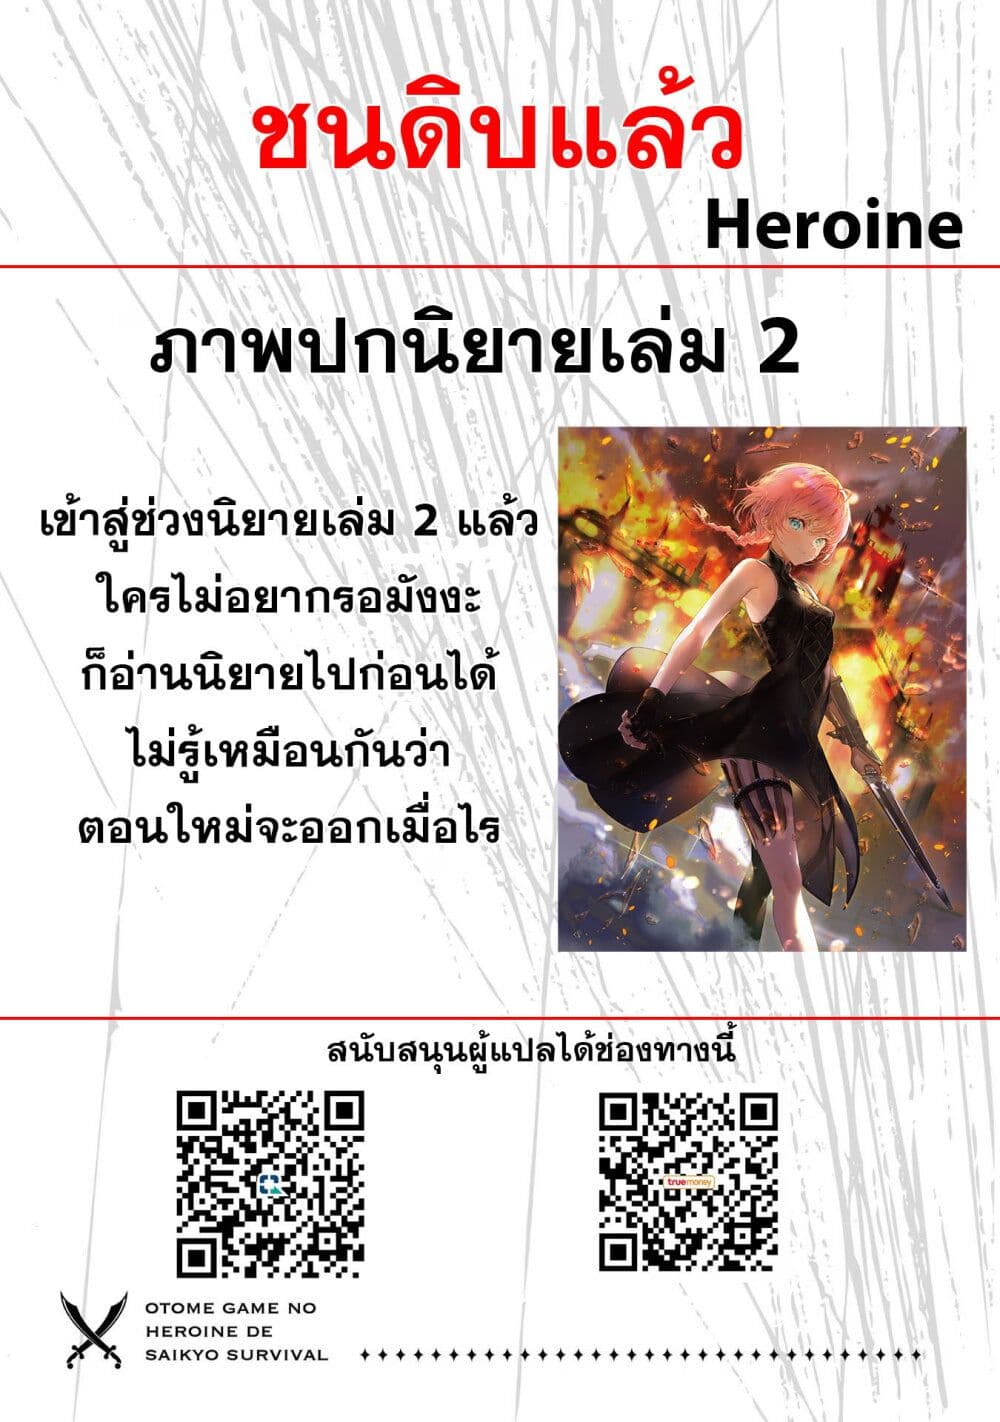 Otome Game no Heroine de Saikyou Survival @COMIC ตอนที่ 17 (40)